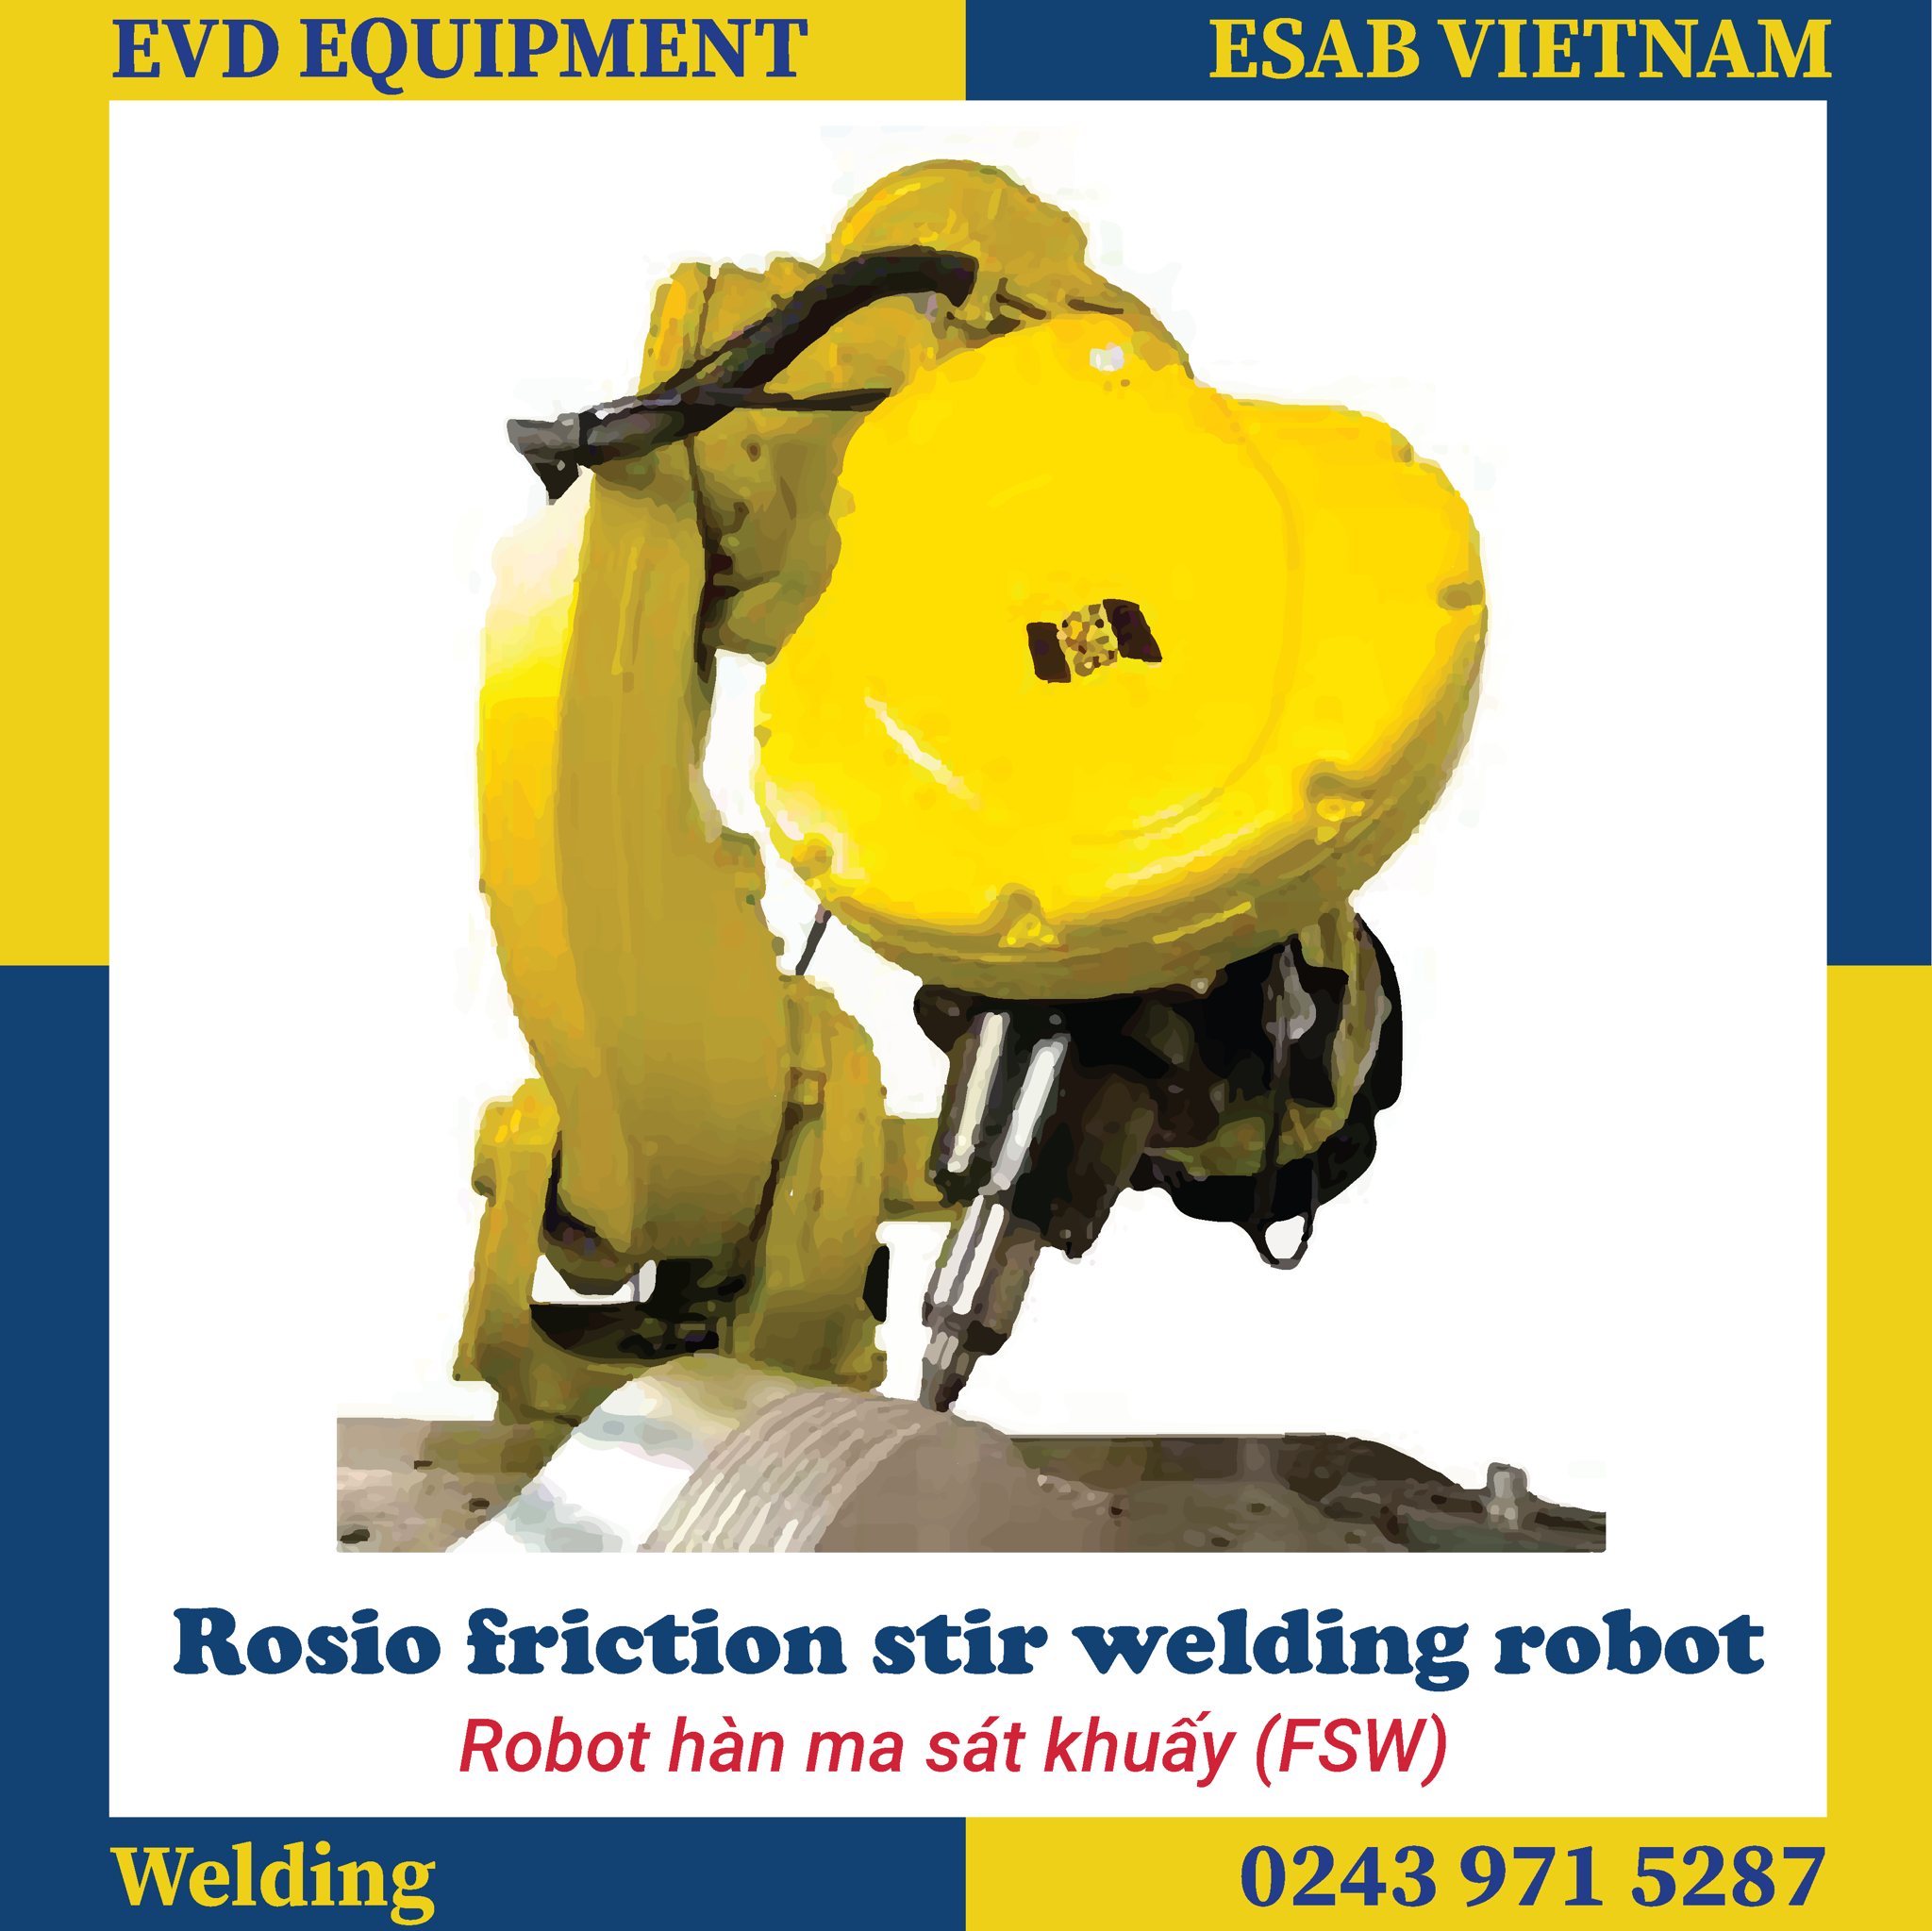 Rosio friction stir welding robot - Robot hàn ma sát khuấy FSW